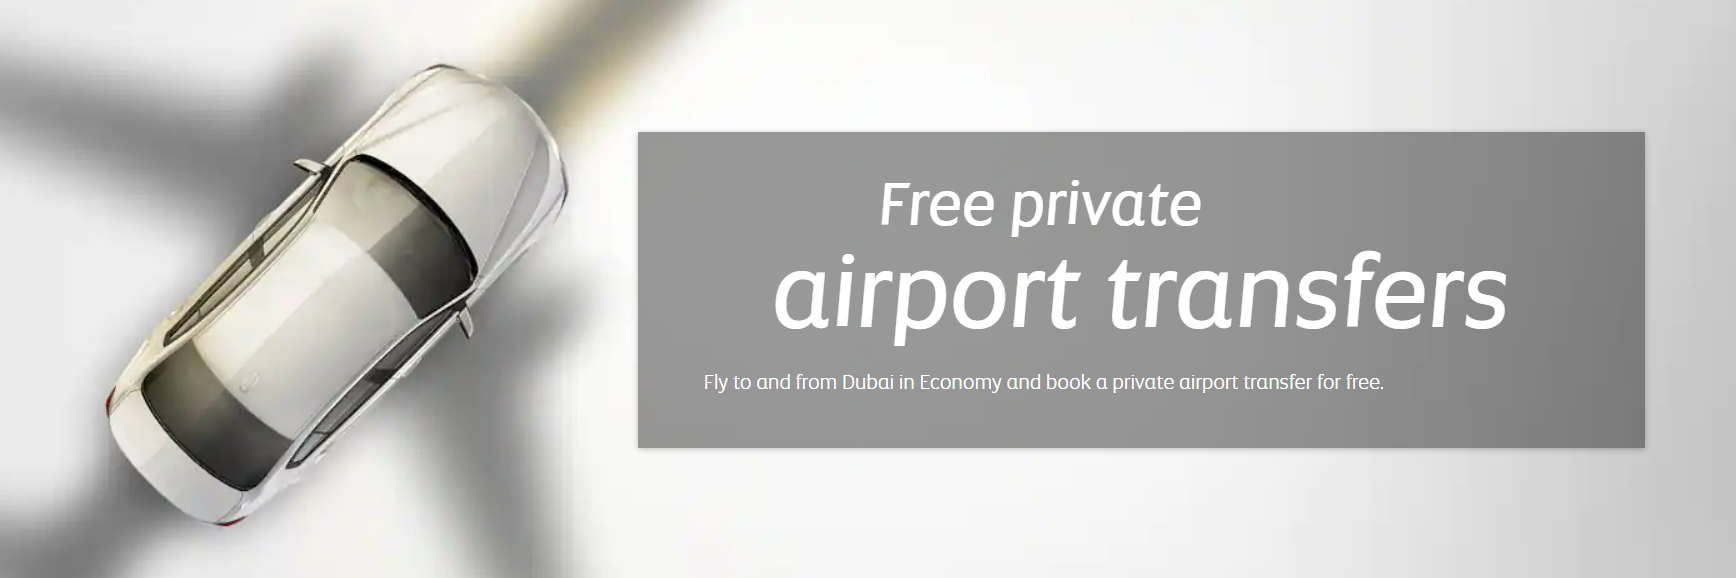 Etihad Airways Free transfer between Dubai and Abu Dhabi